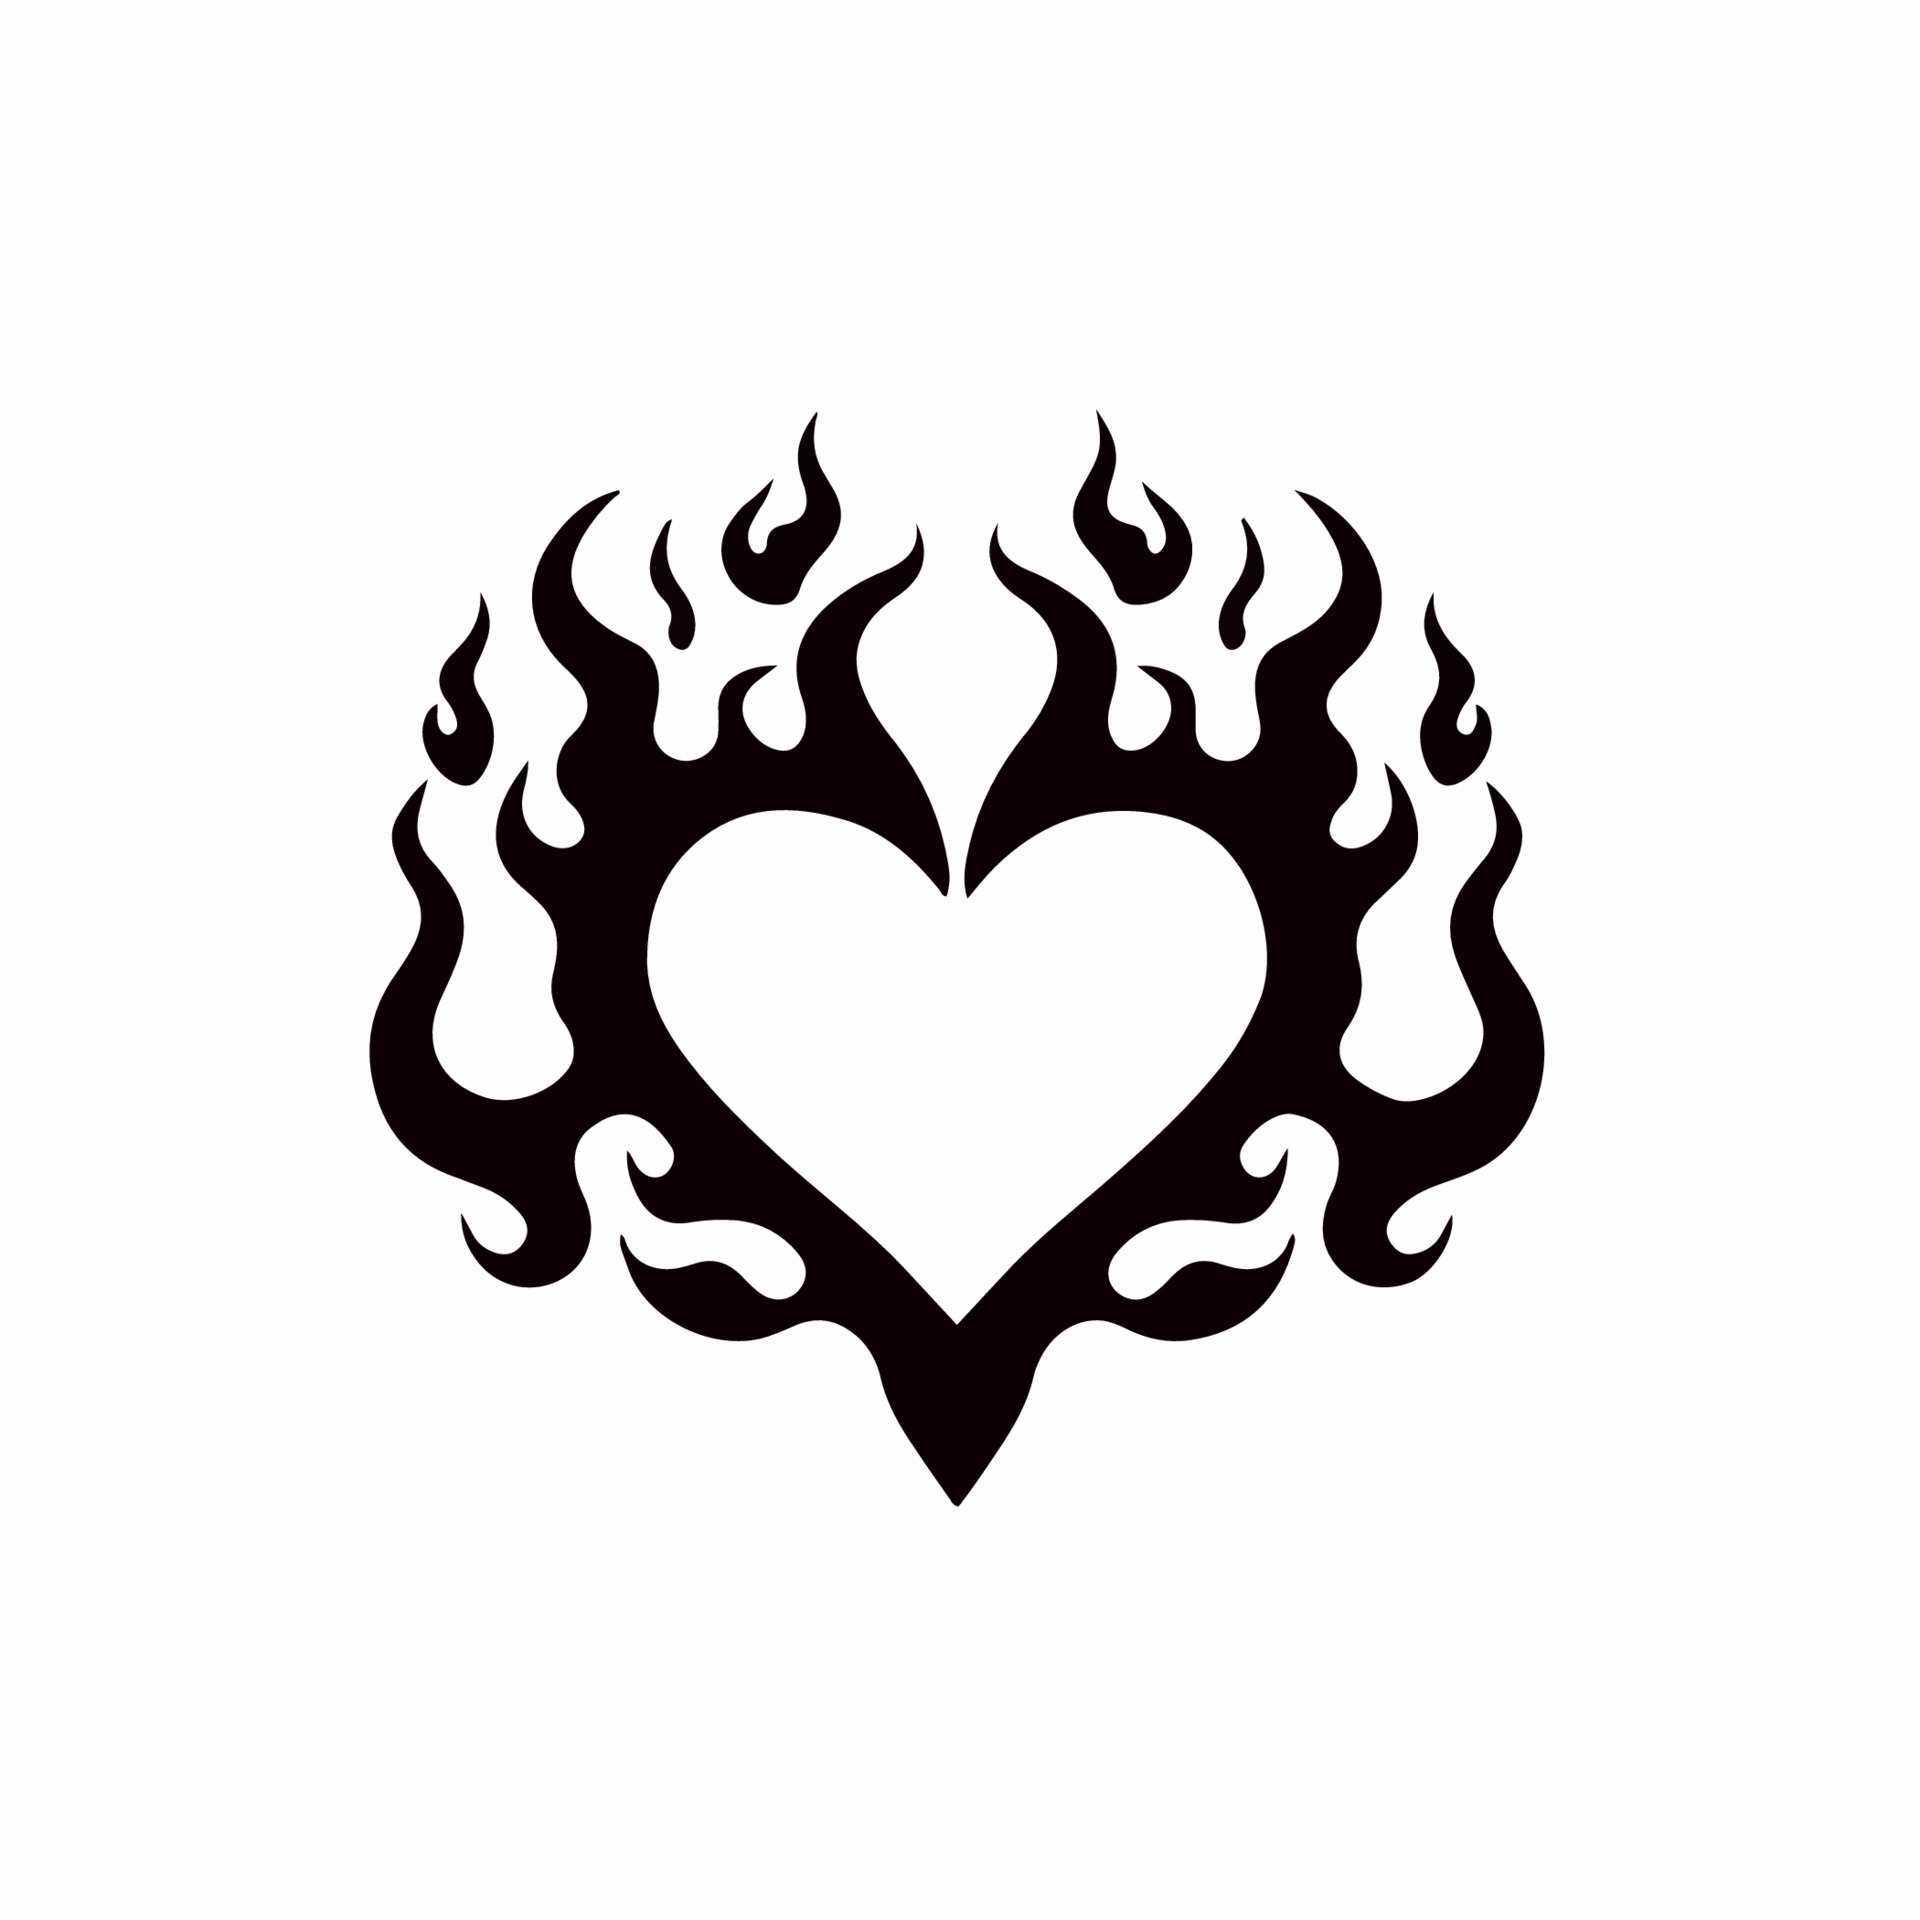 Heart Love Symbol Logo on White Background Tribal Stencil Tattoo Design  Concept Flat Vector Illustration 14398124 Vector Art at Vecteezy